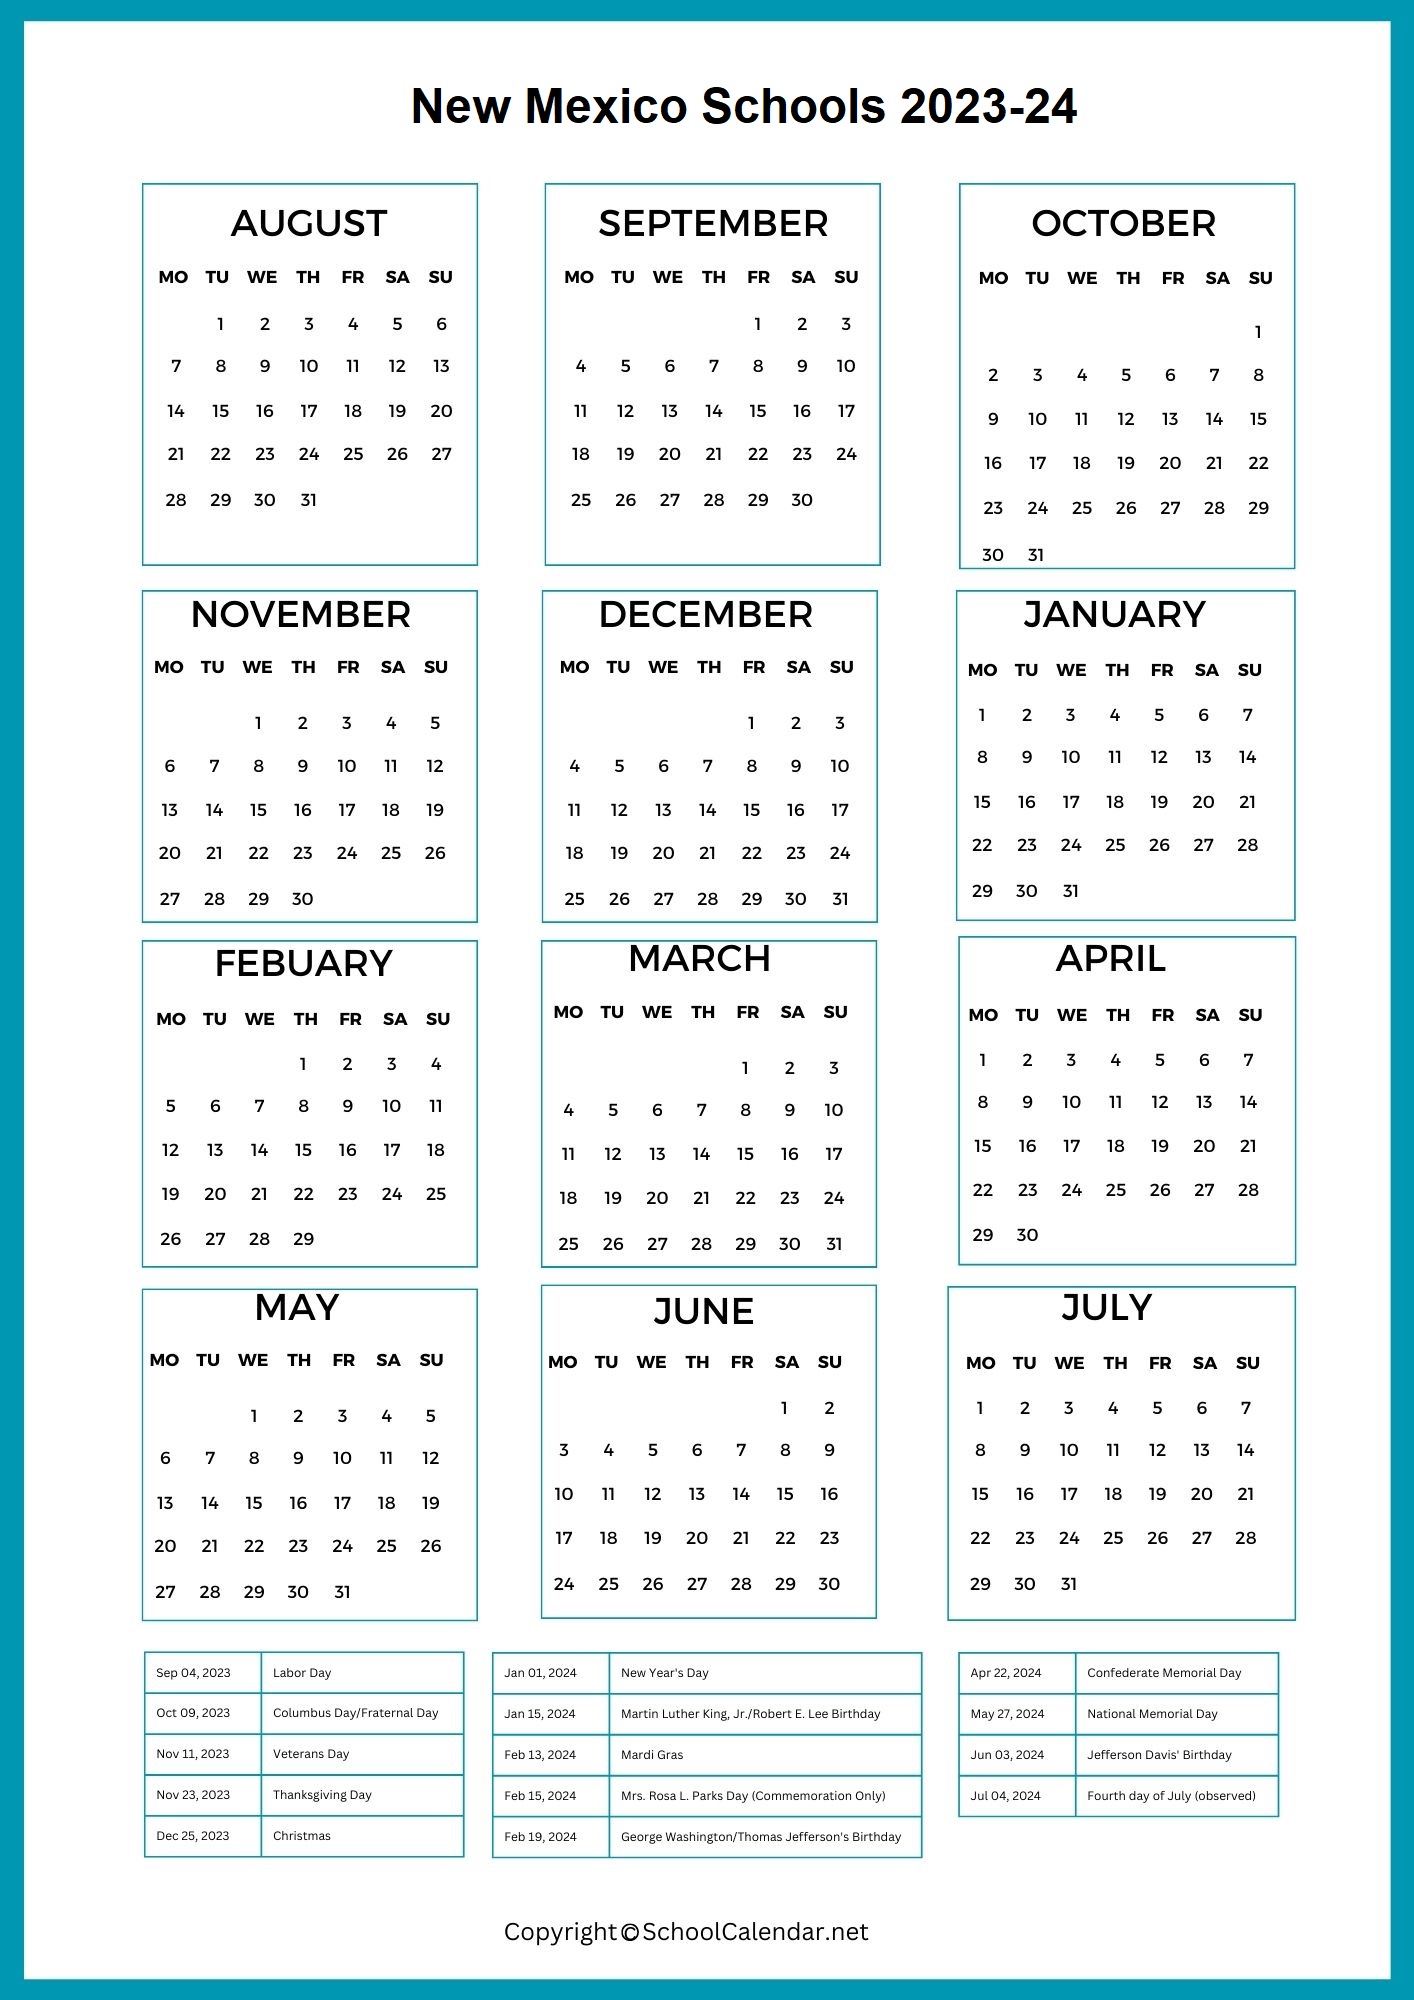 New-Mexico School Holiday Calendar 2023